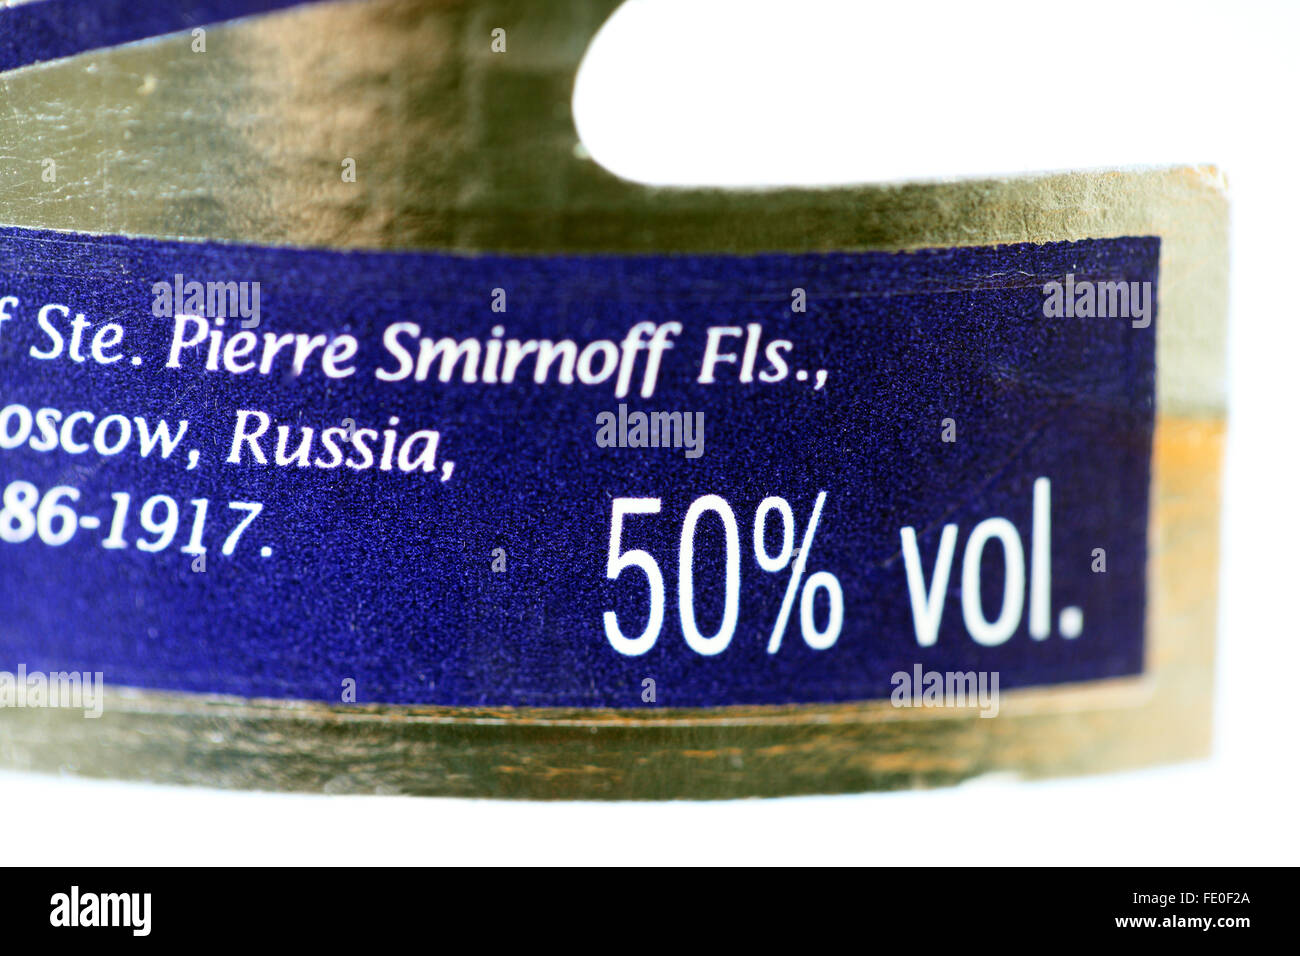 label of Stock blue showing Alamy Smirnoff of - Vokda bottle volume 50% Photo Label